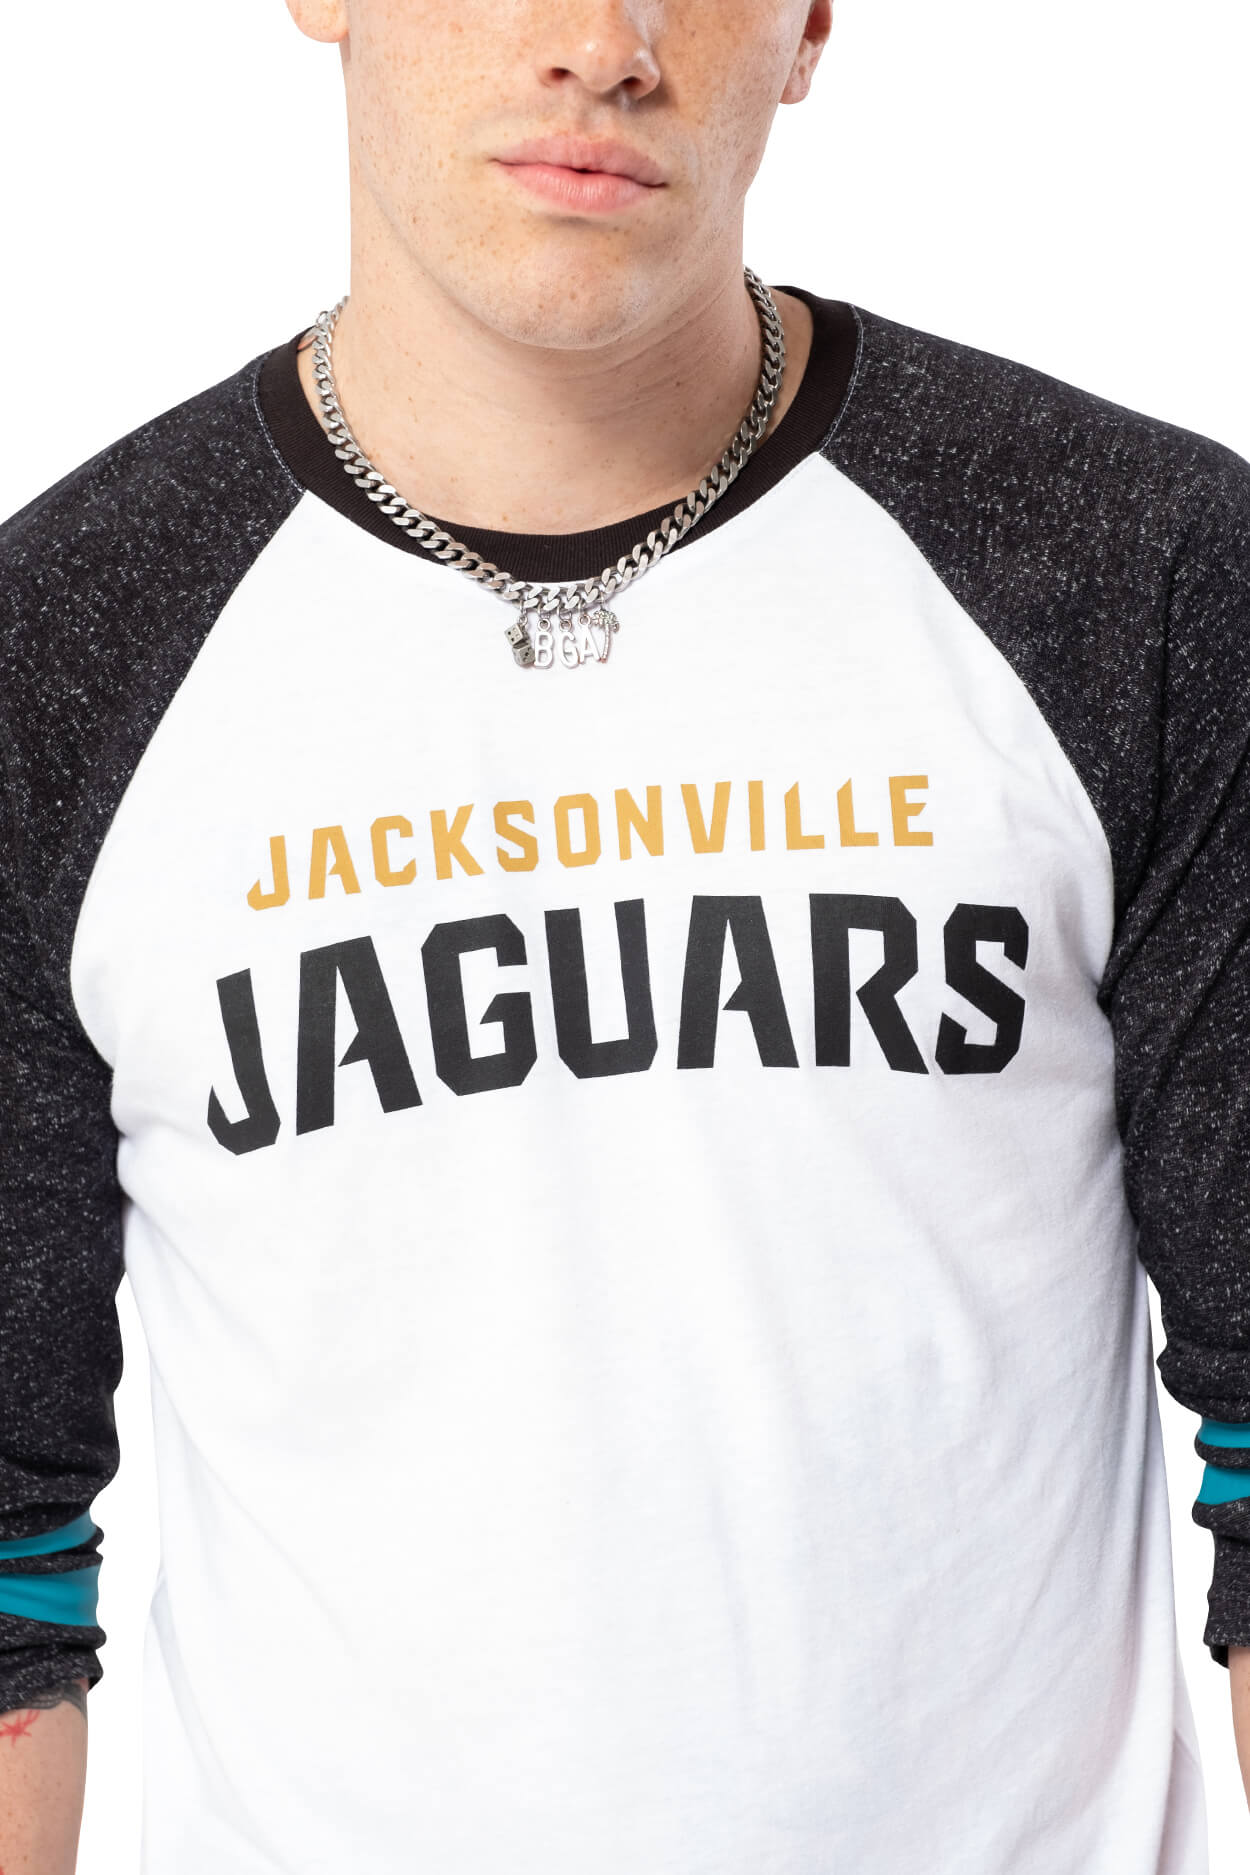 NFL Jacksonville Jaguars Men's Baseball Tee|Jacksonville Jaguars